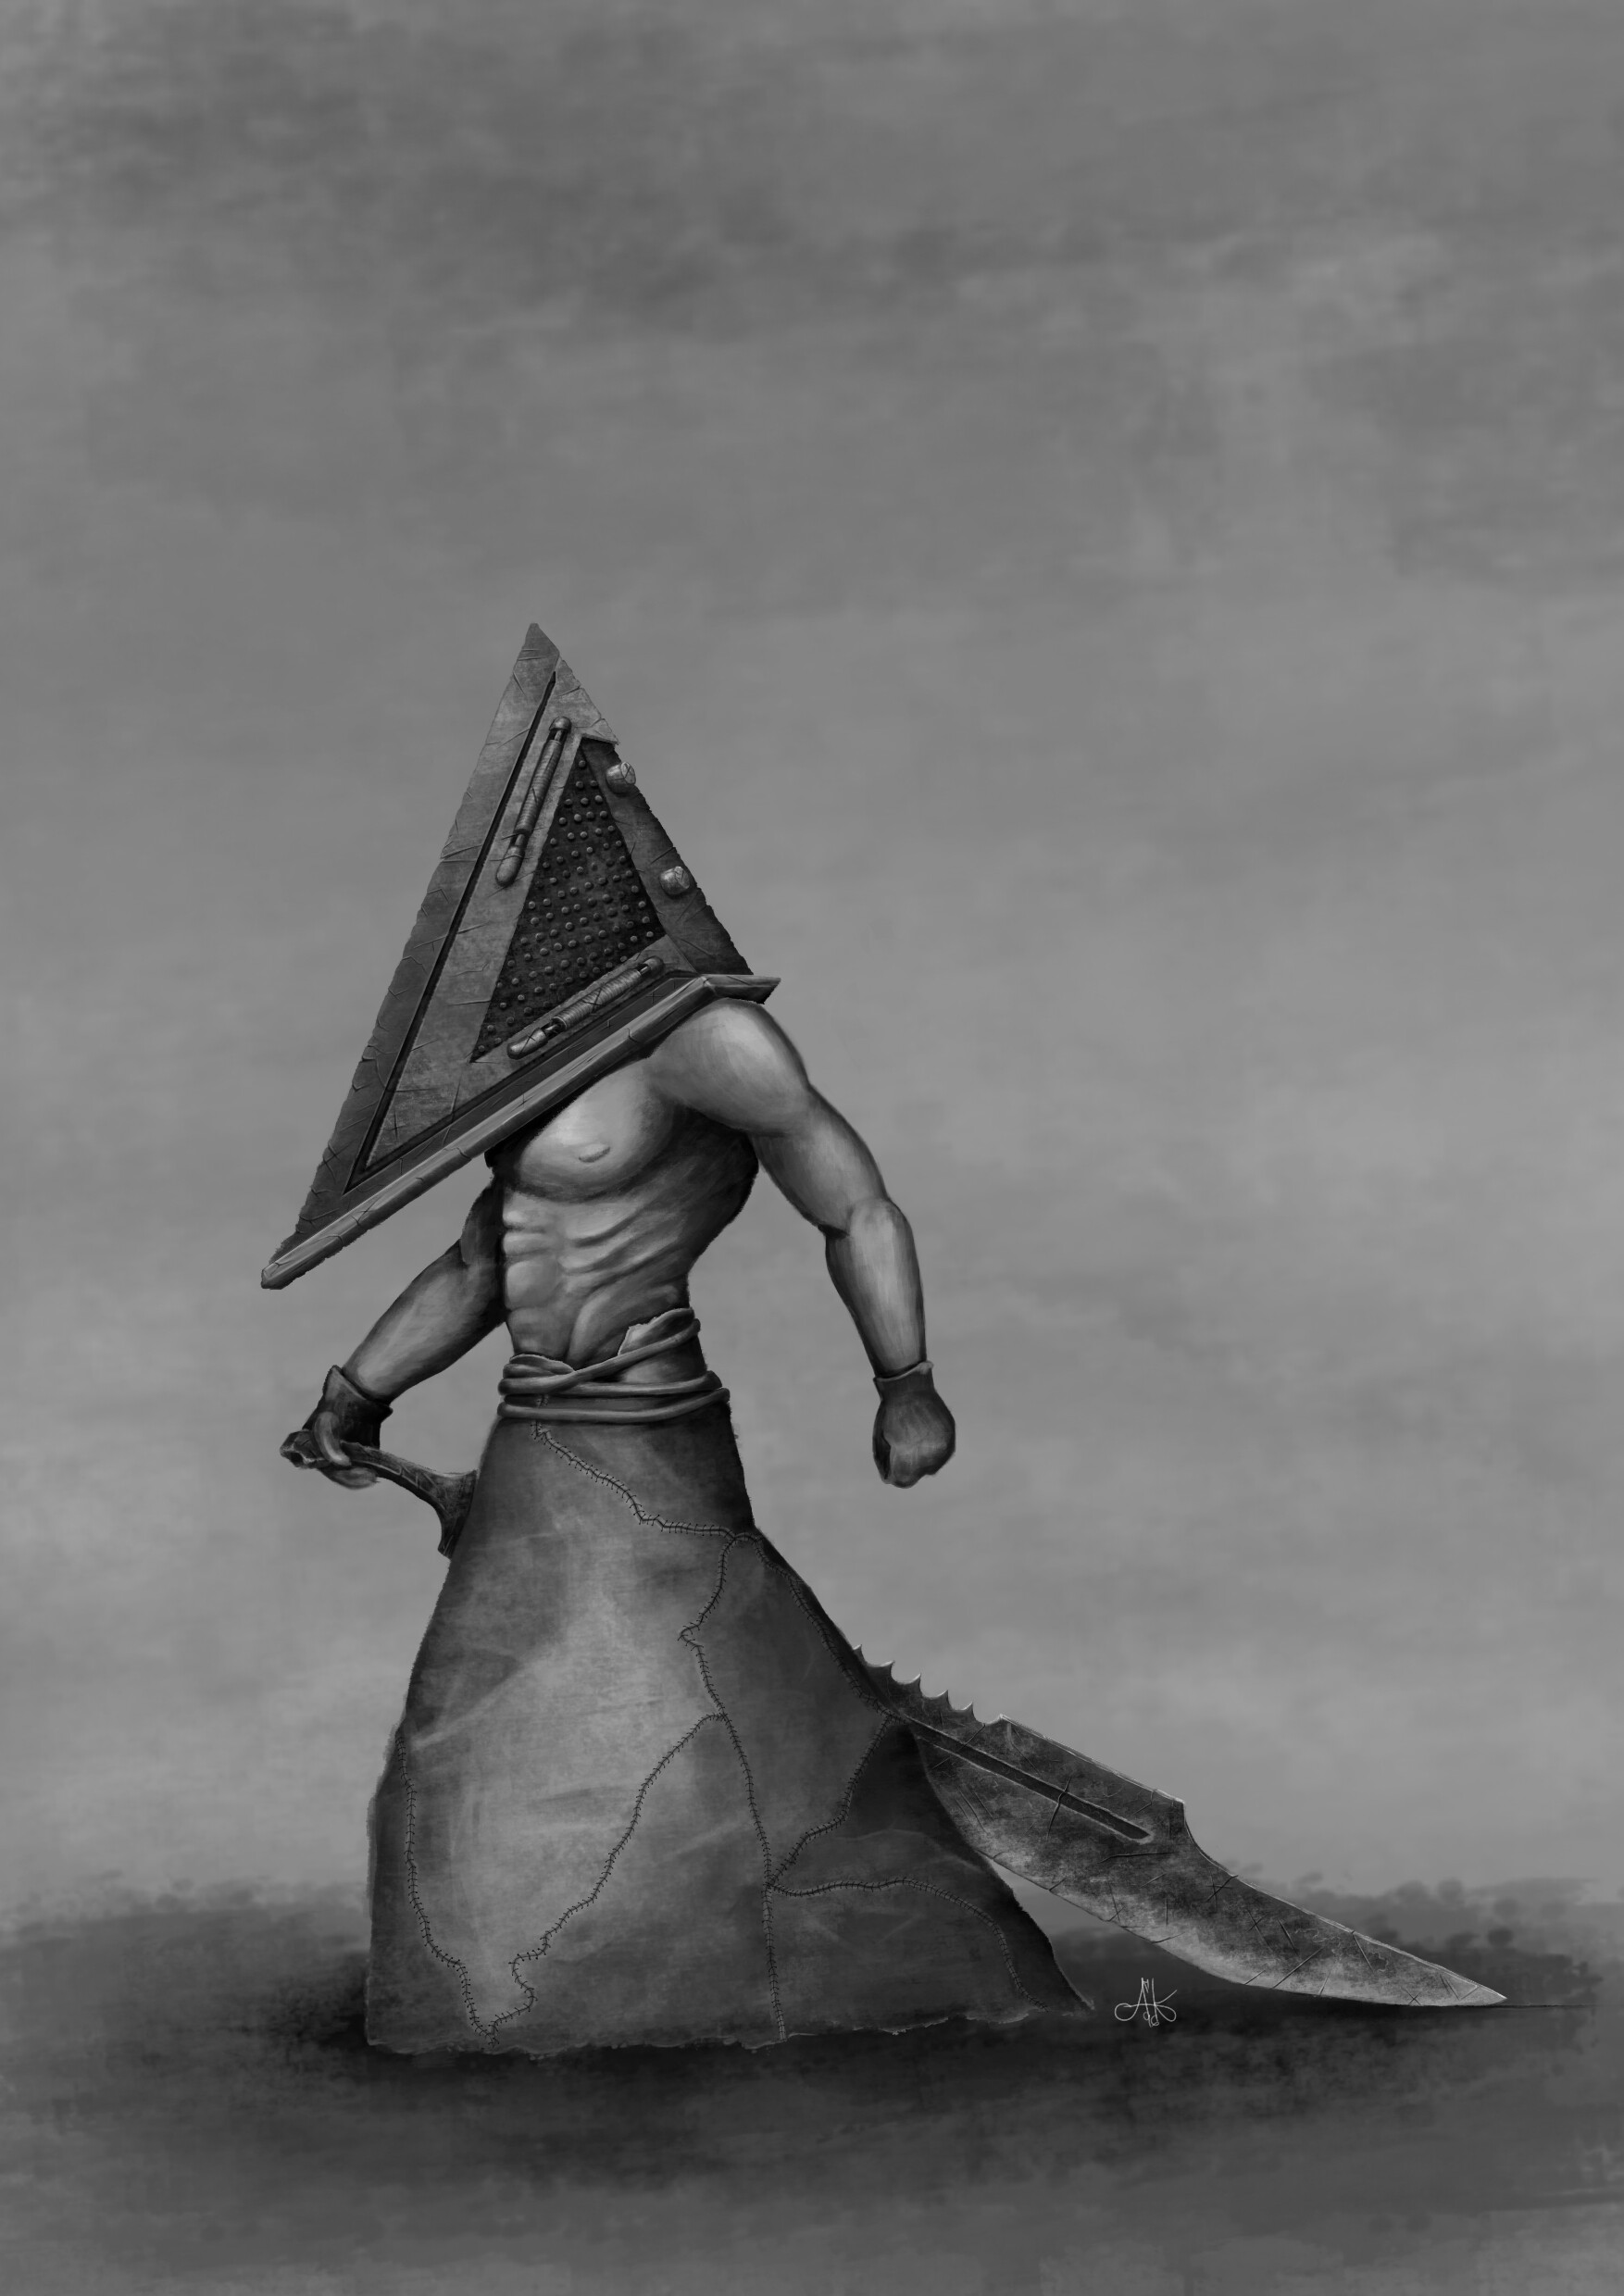 ArtStation - Pyramid head